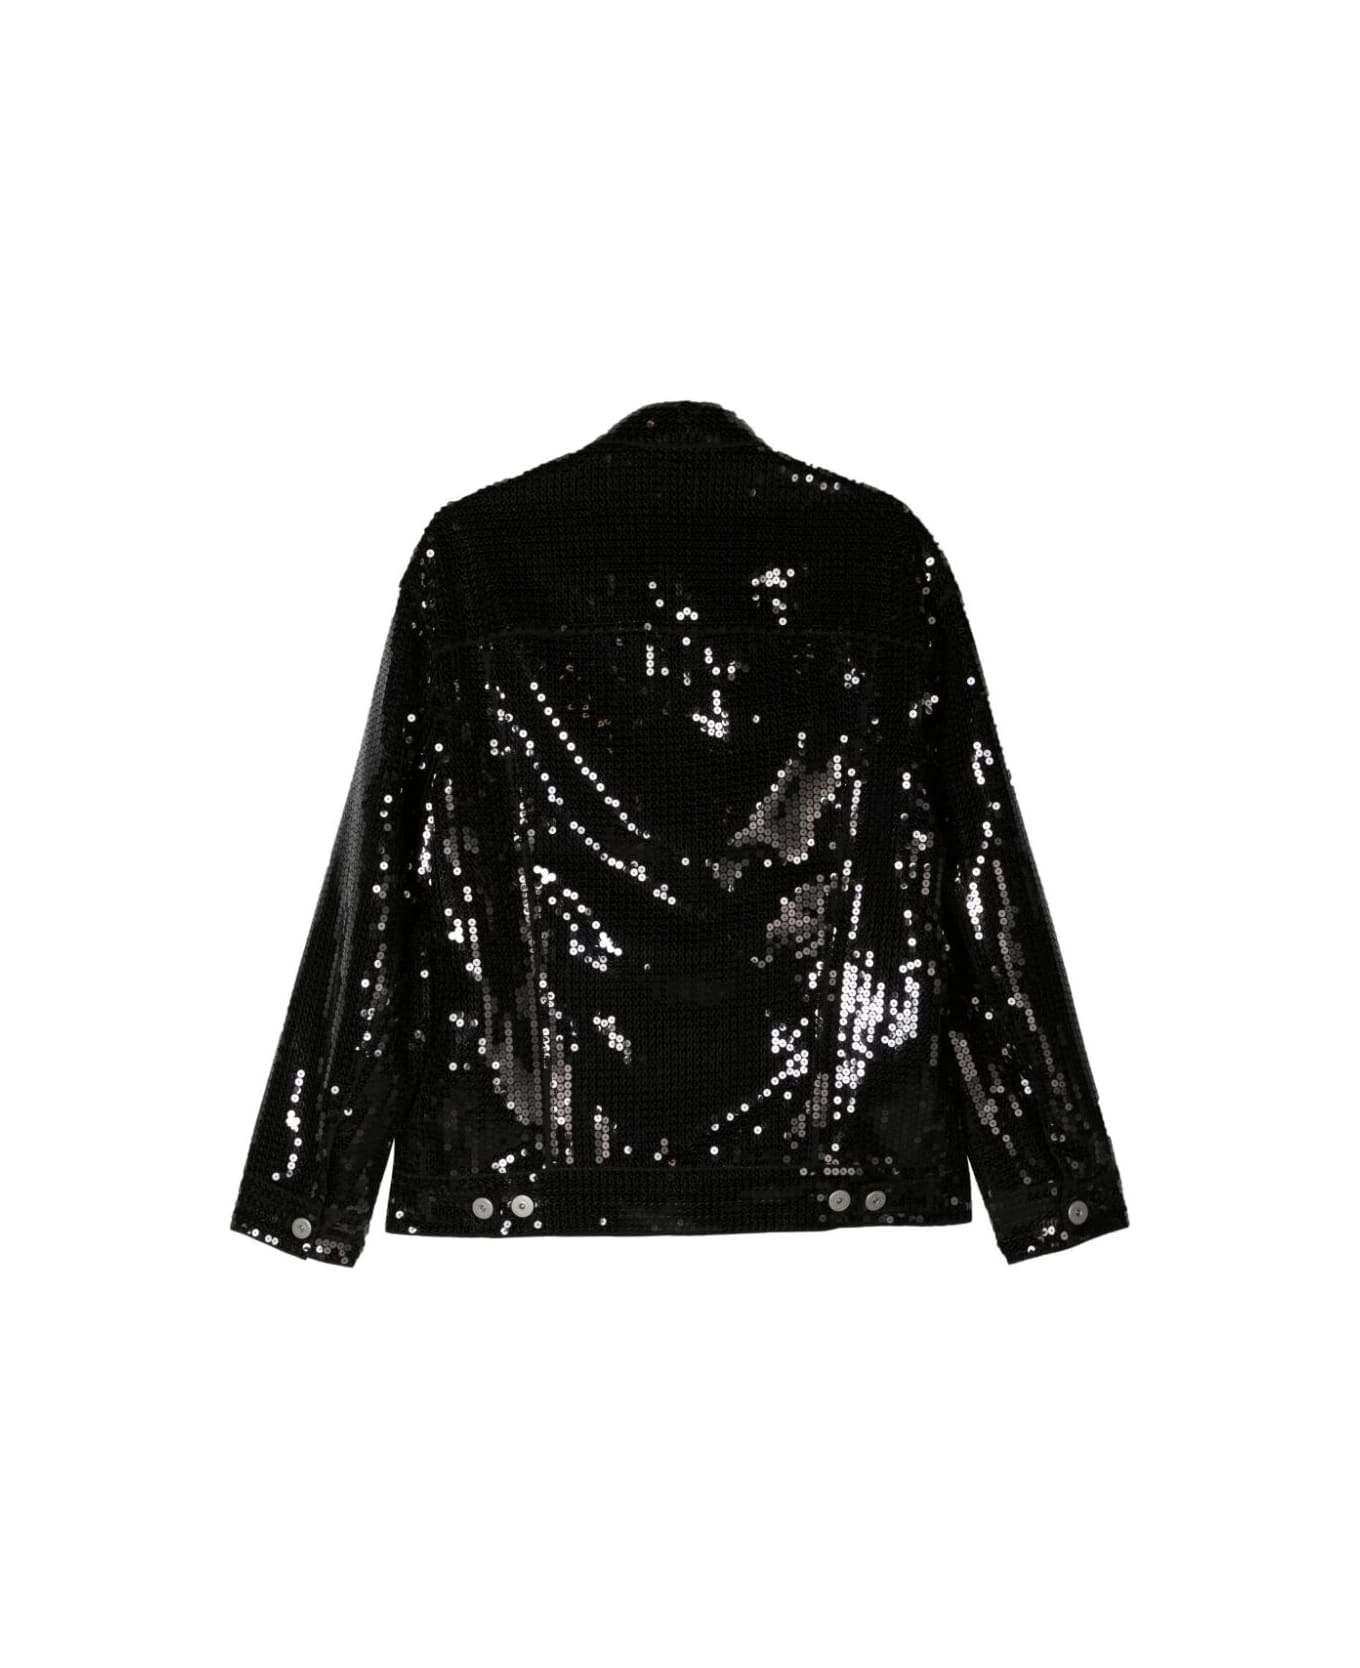 Junya Watanabe Comme Des Garçons Oversized Jacket - Black Black